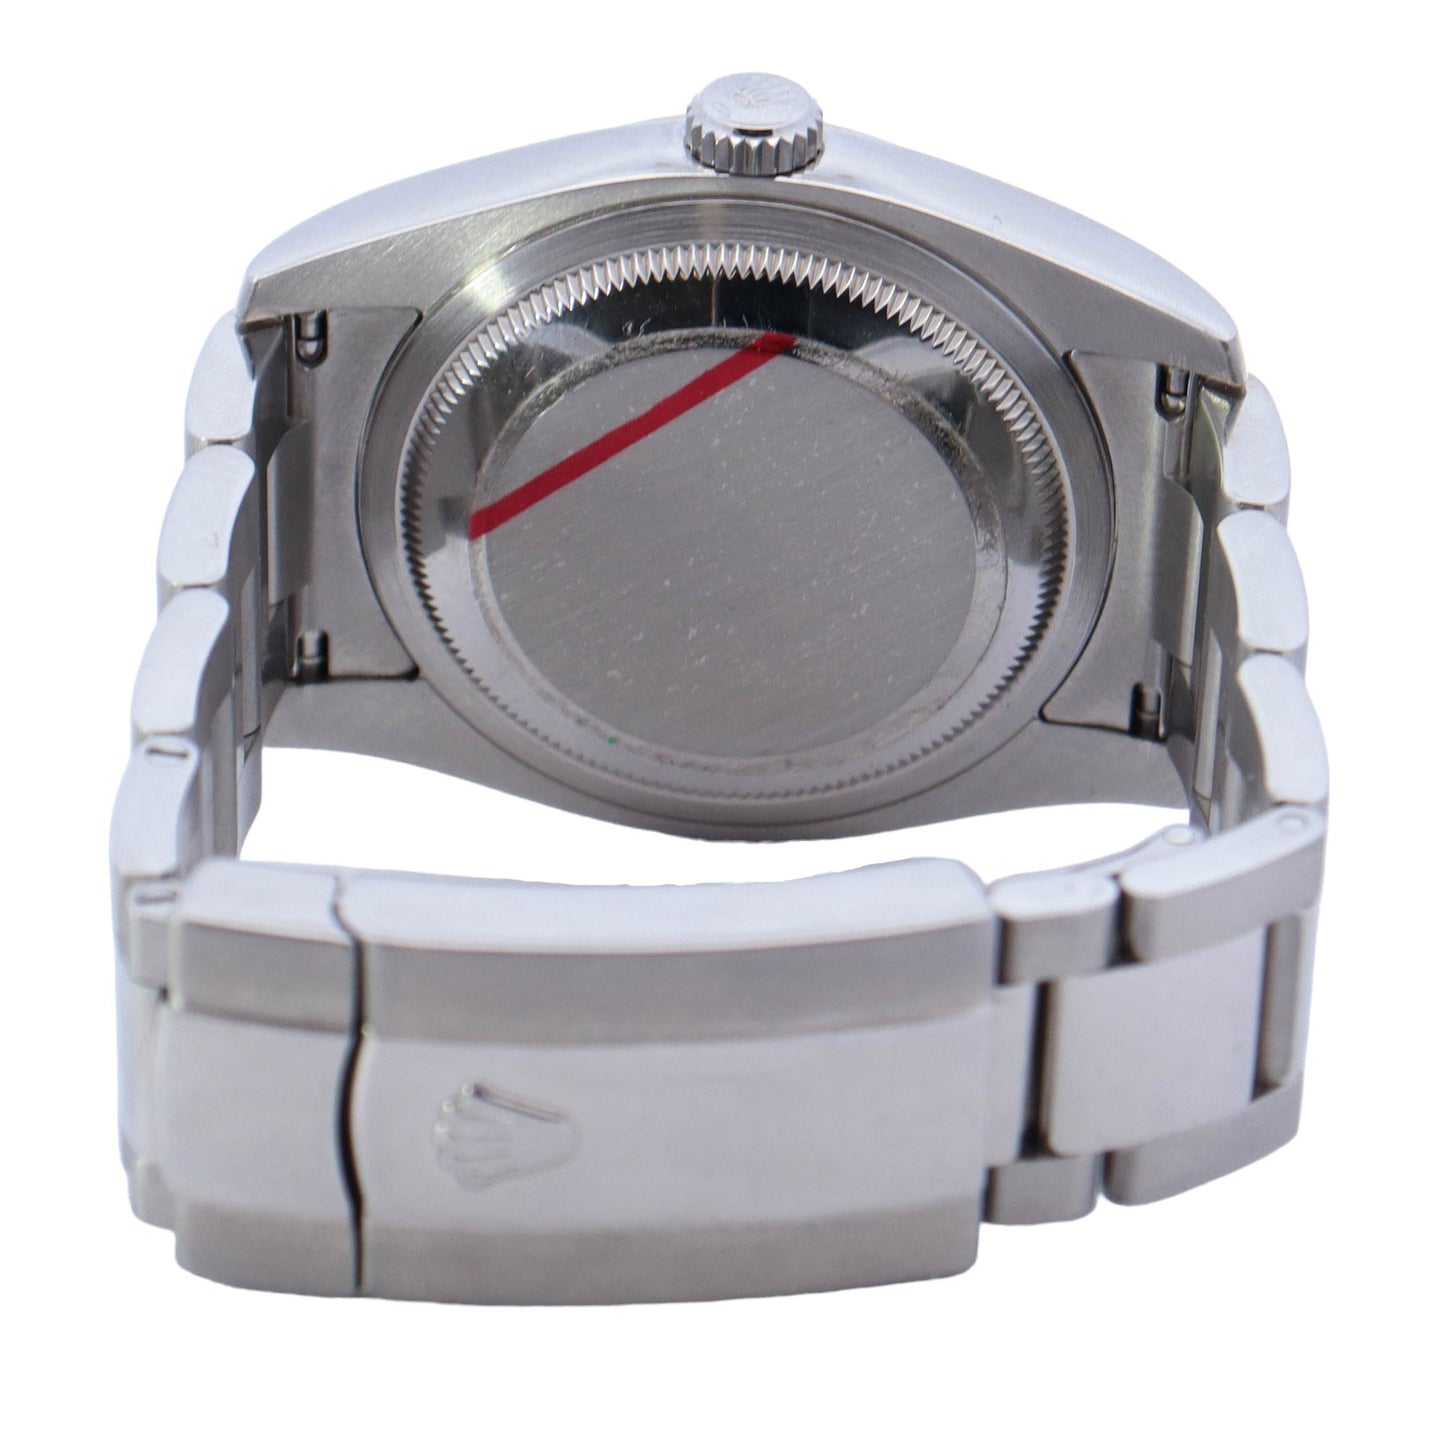 Rolex Datejust Stainless Steel Black Roman Dial Watch Reference# 116234 - Happy Jewelers Fine Jewelry Lifetime Warranty